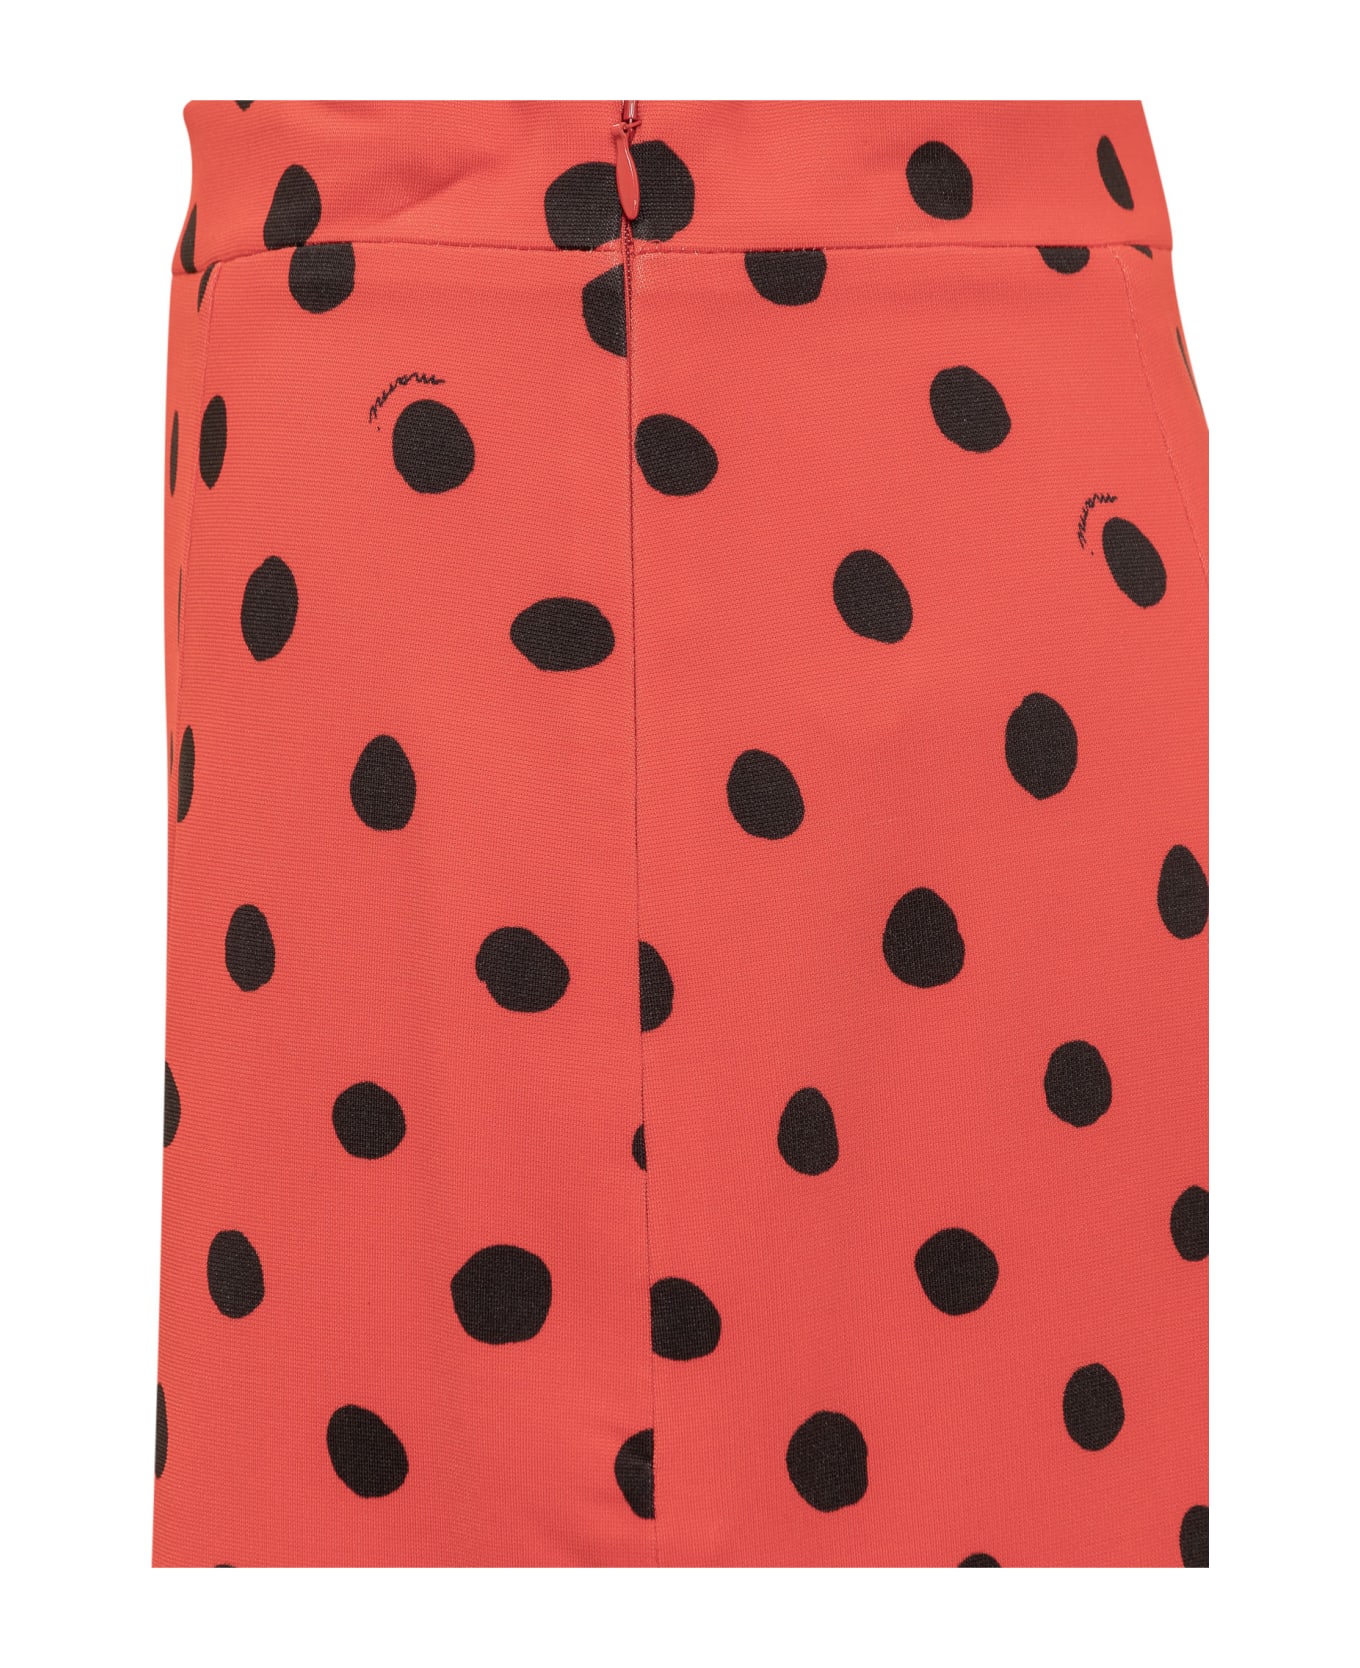 Marni Polka Dot Skirt - ROSSO スカート